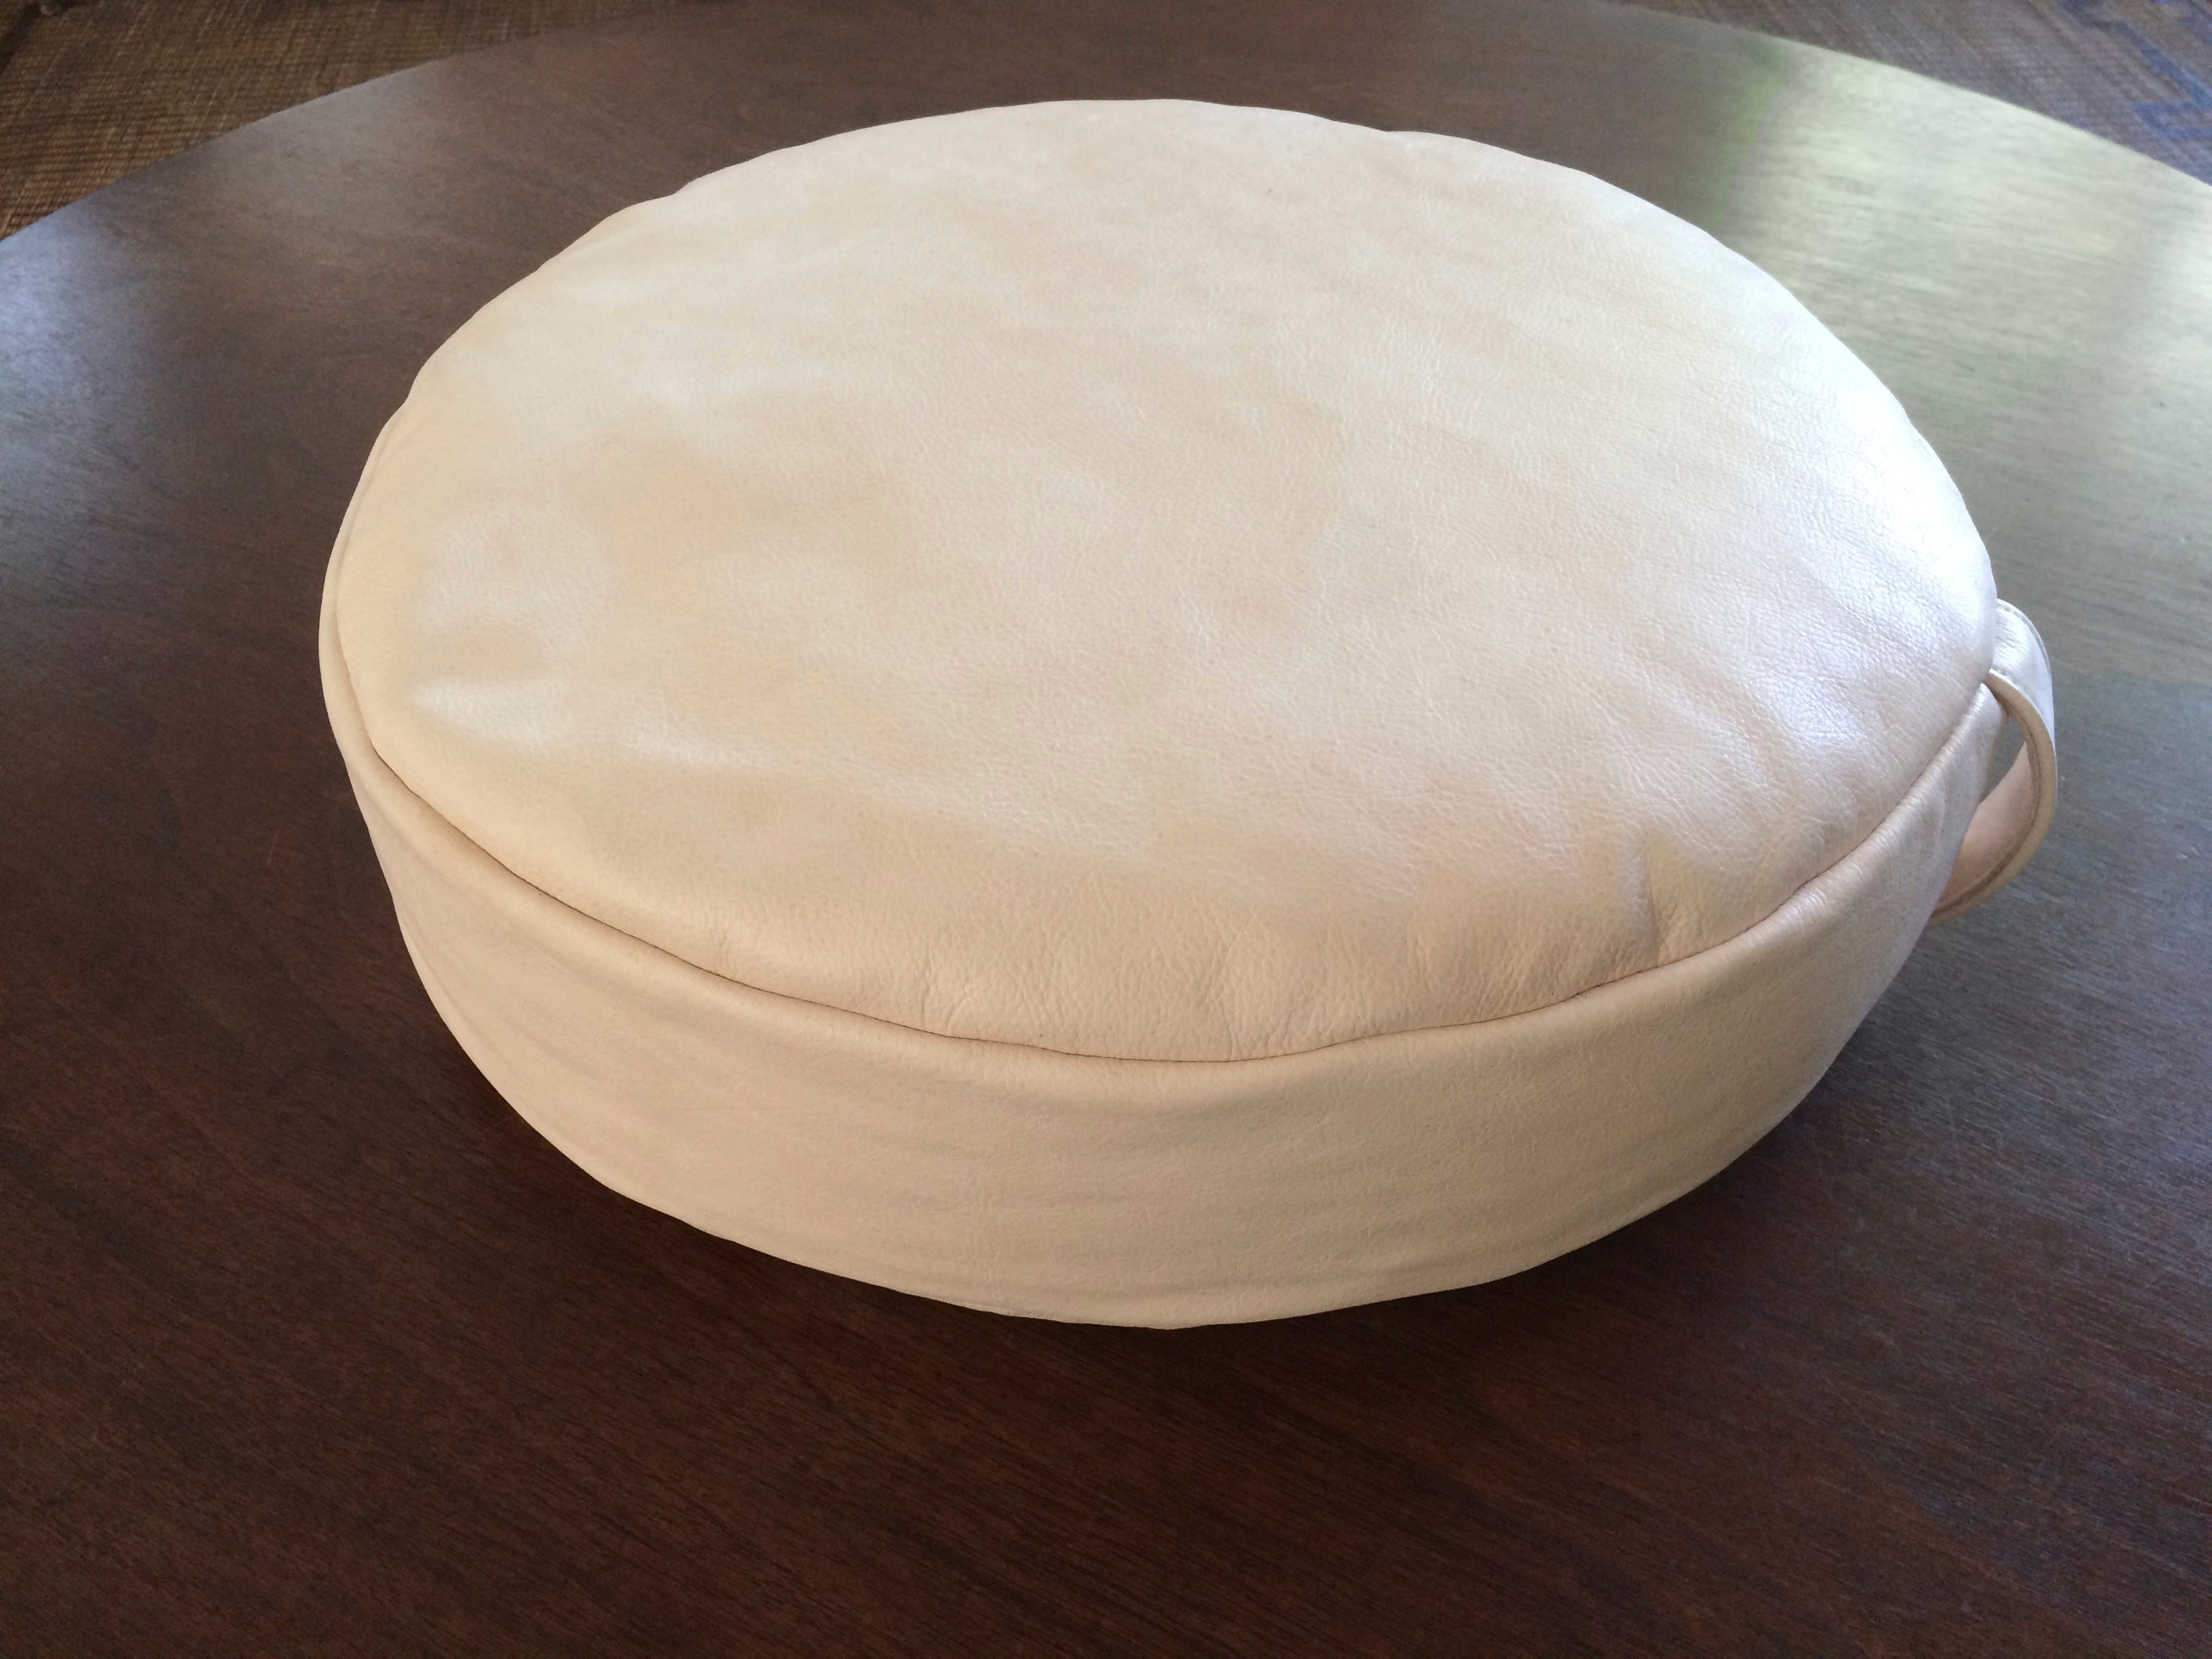 PEBBLE meditation cushion in nude leather